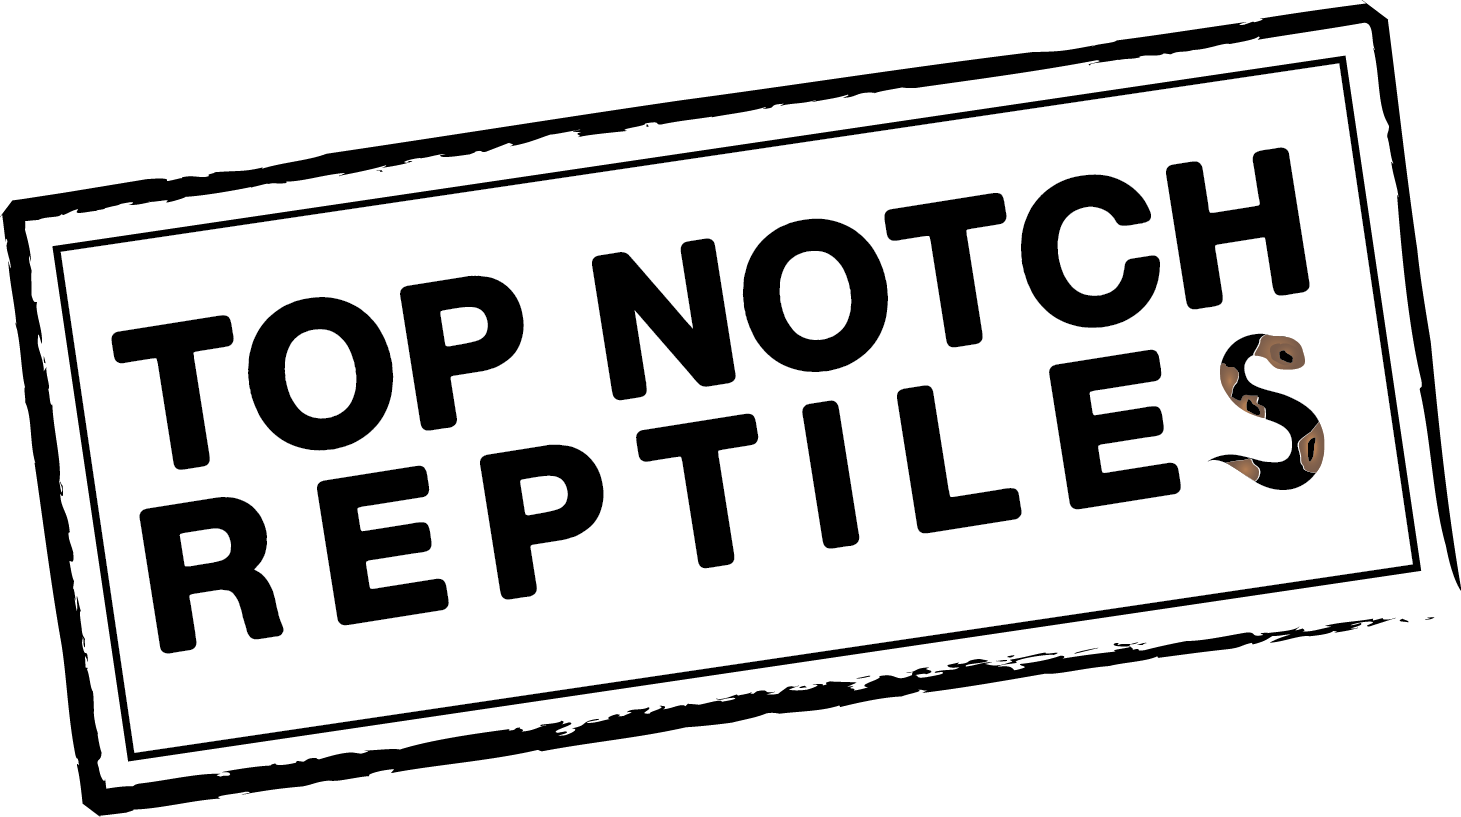 Top Notch Reptiles